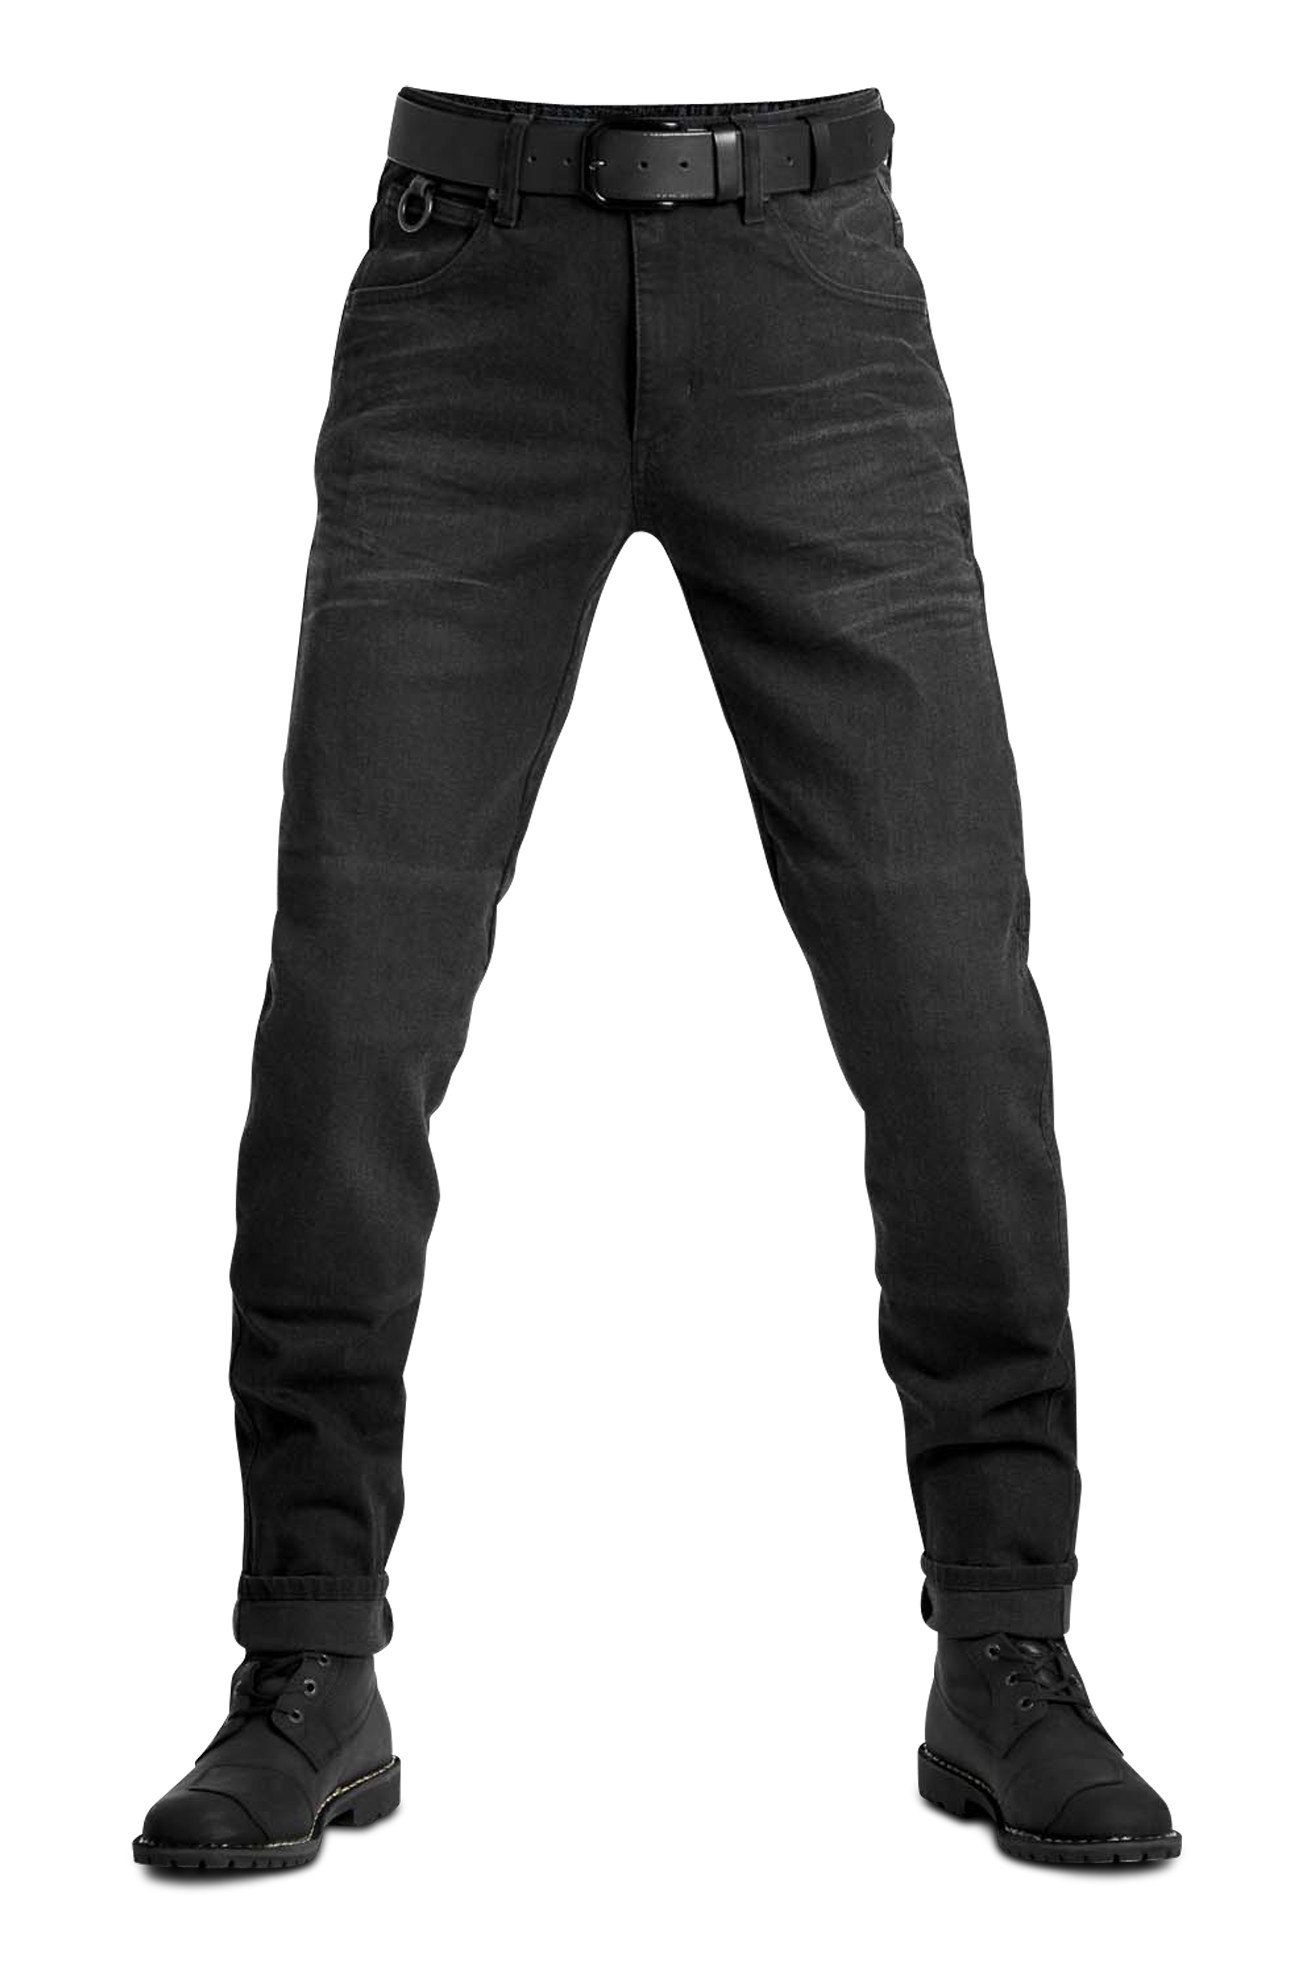 Pando Moto Pantalones de Moto BOSS Dyn 01 Slim-Fit Negros